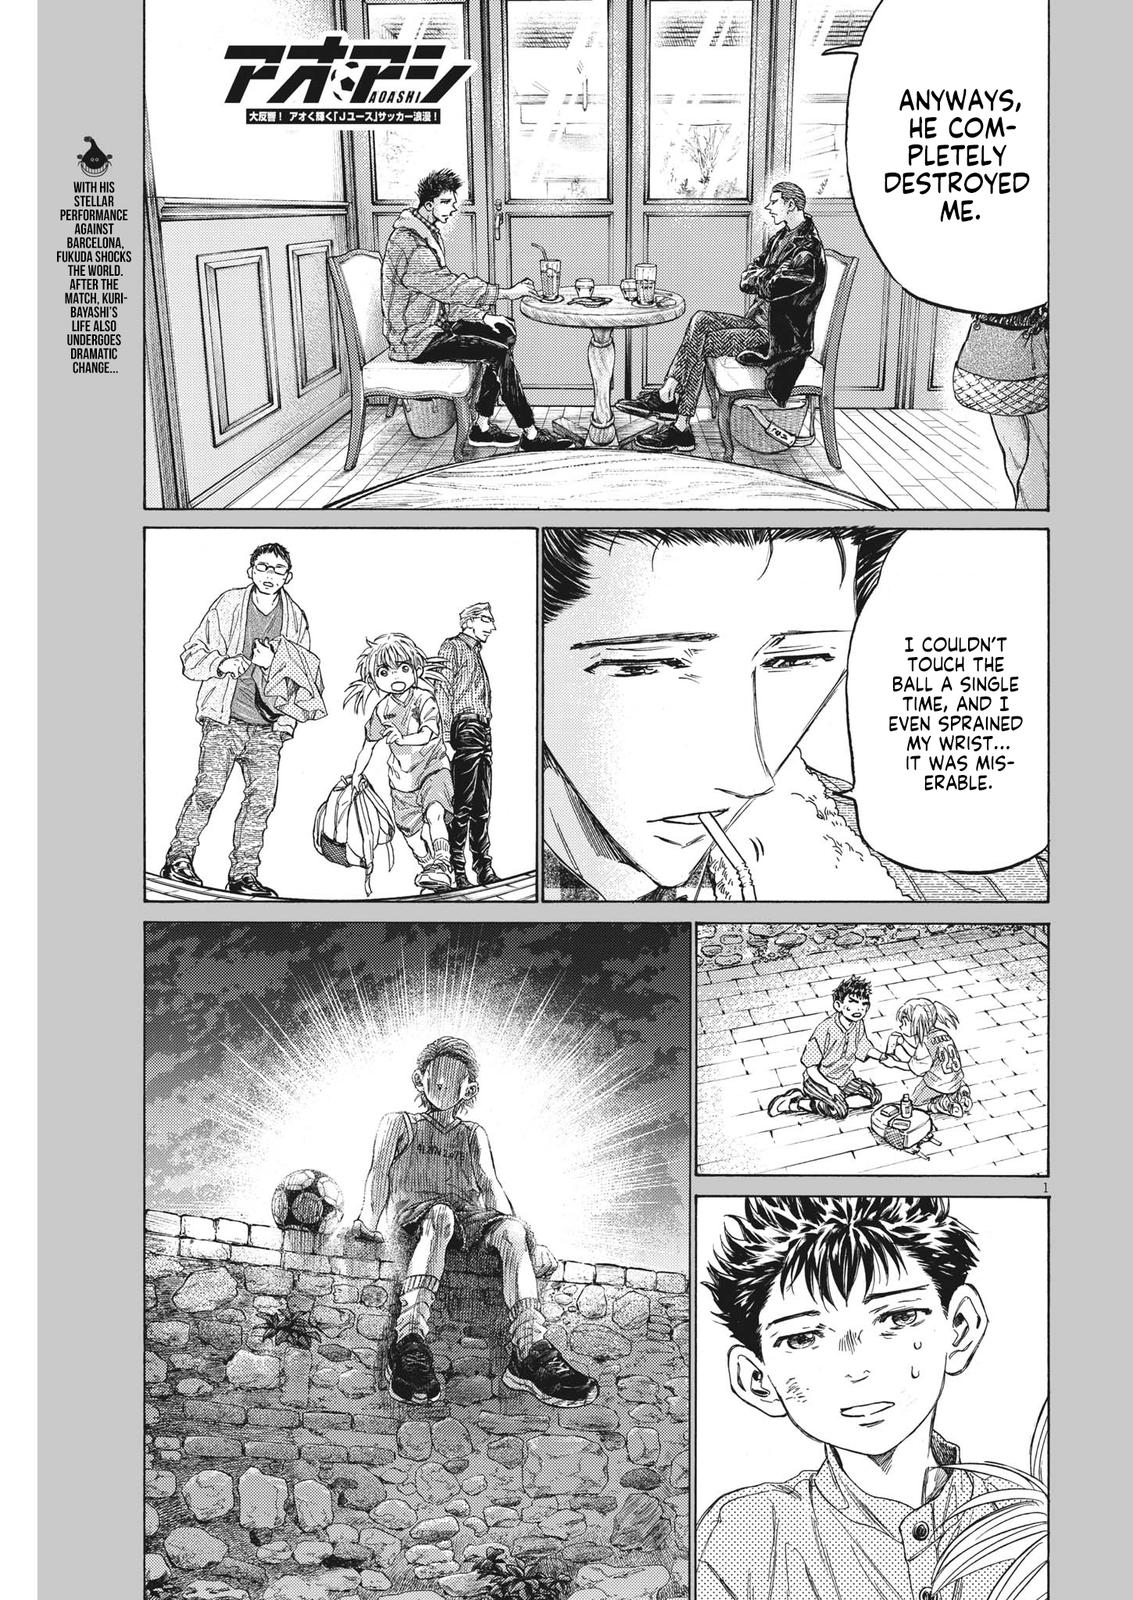 Read Ao ashi Manga [Latest Chapters]